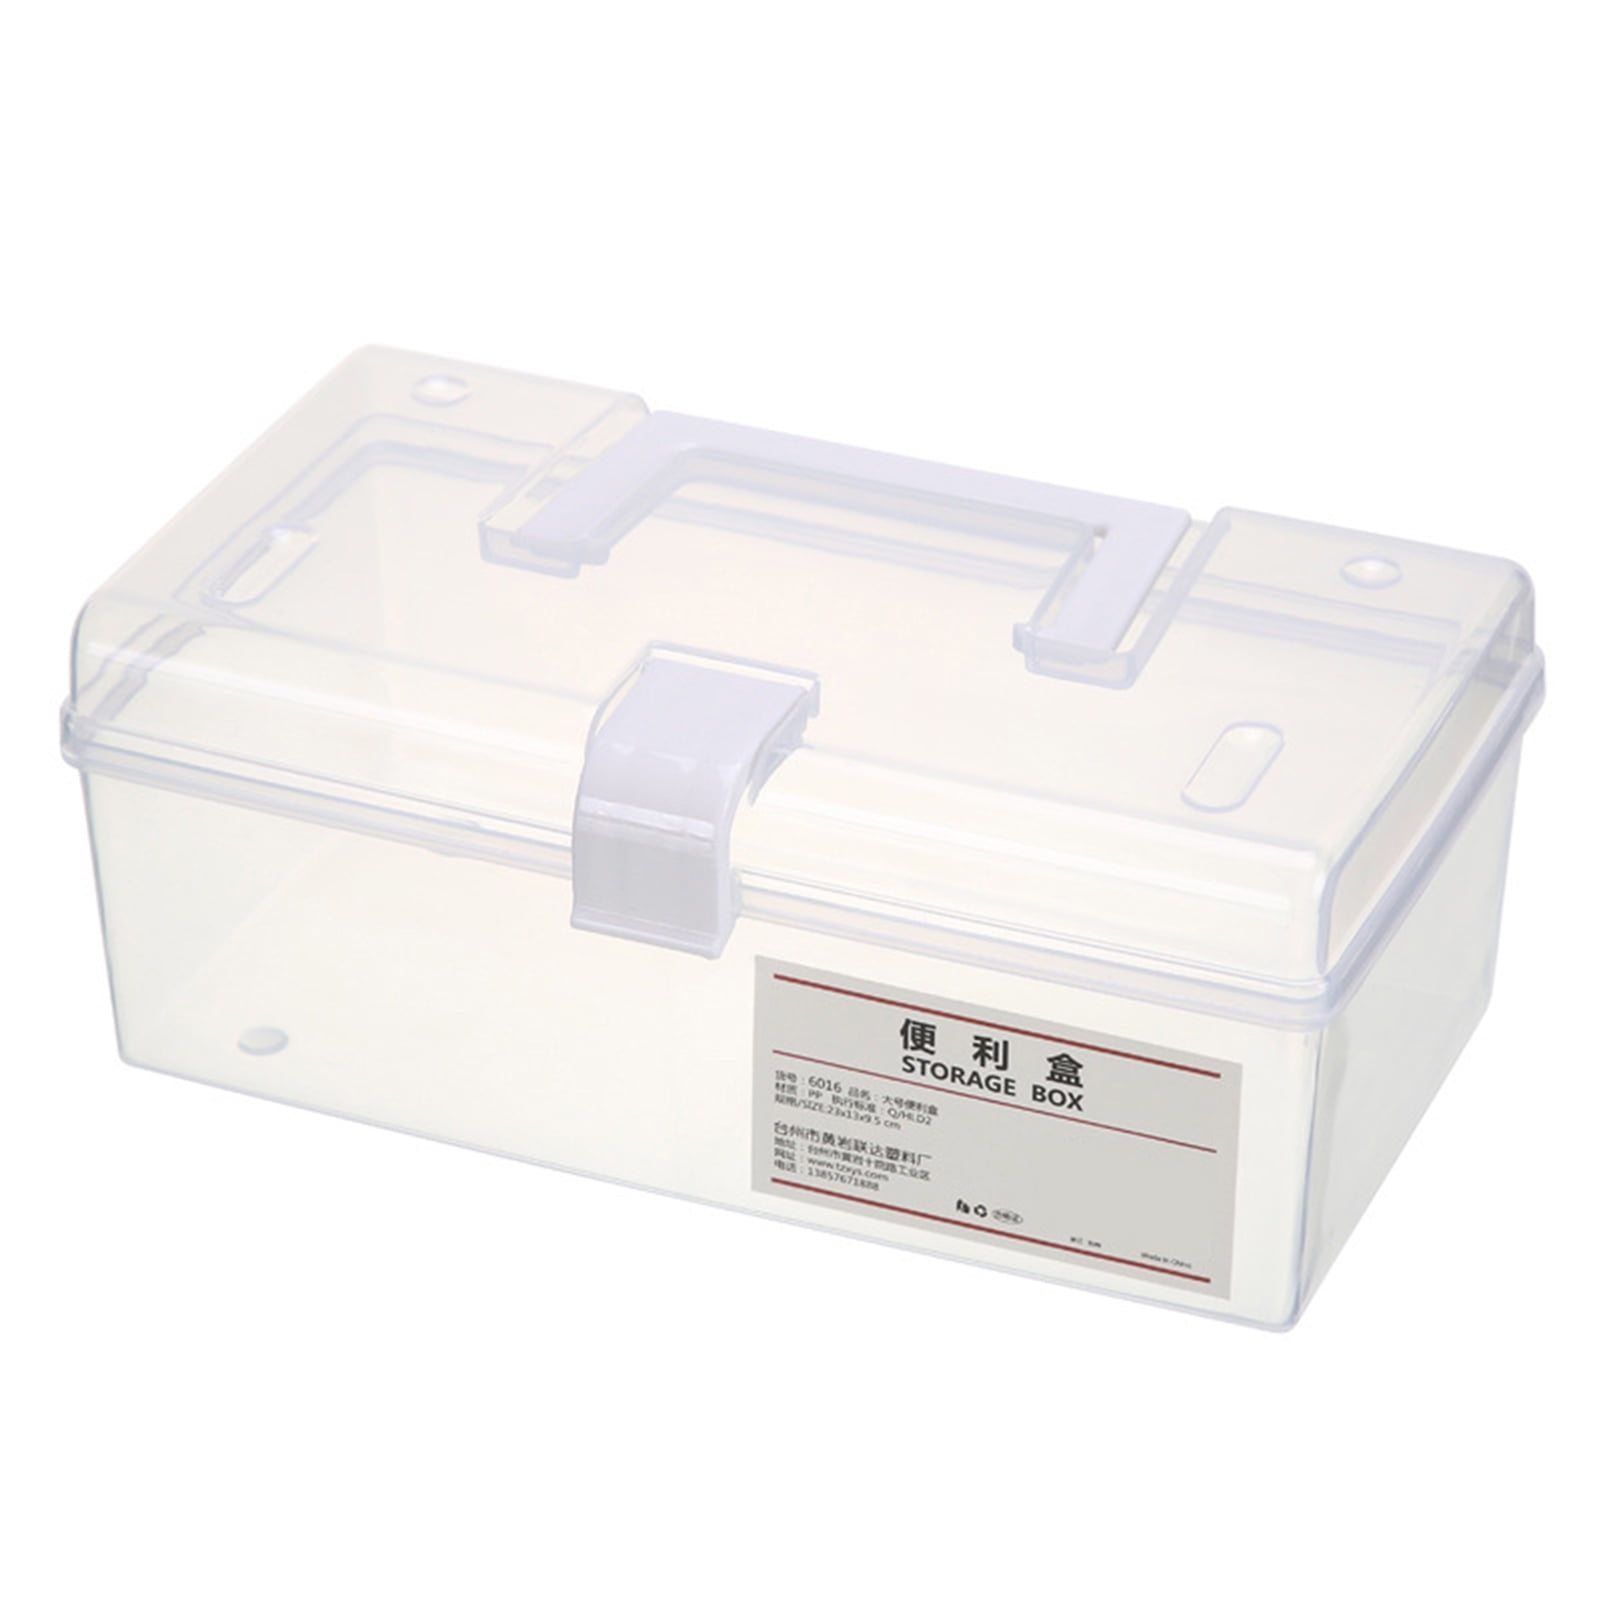 Contico Portable Tool Box,37 W x 21 D x 20 H 3725